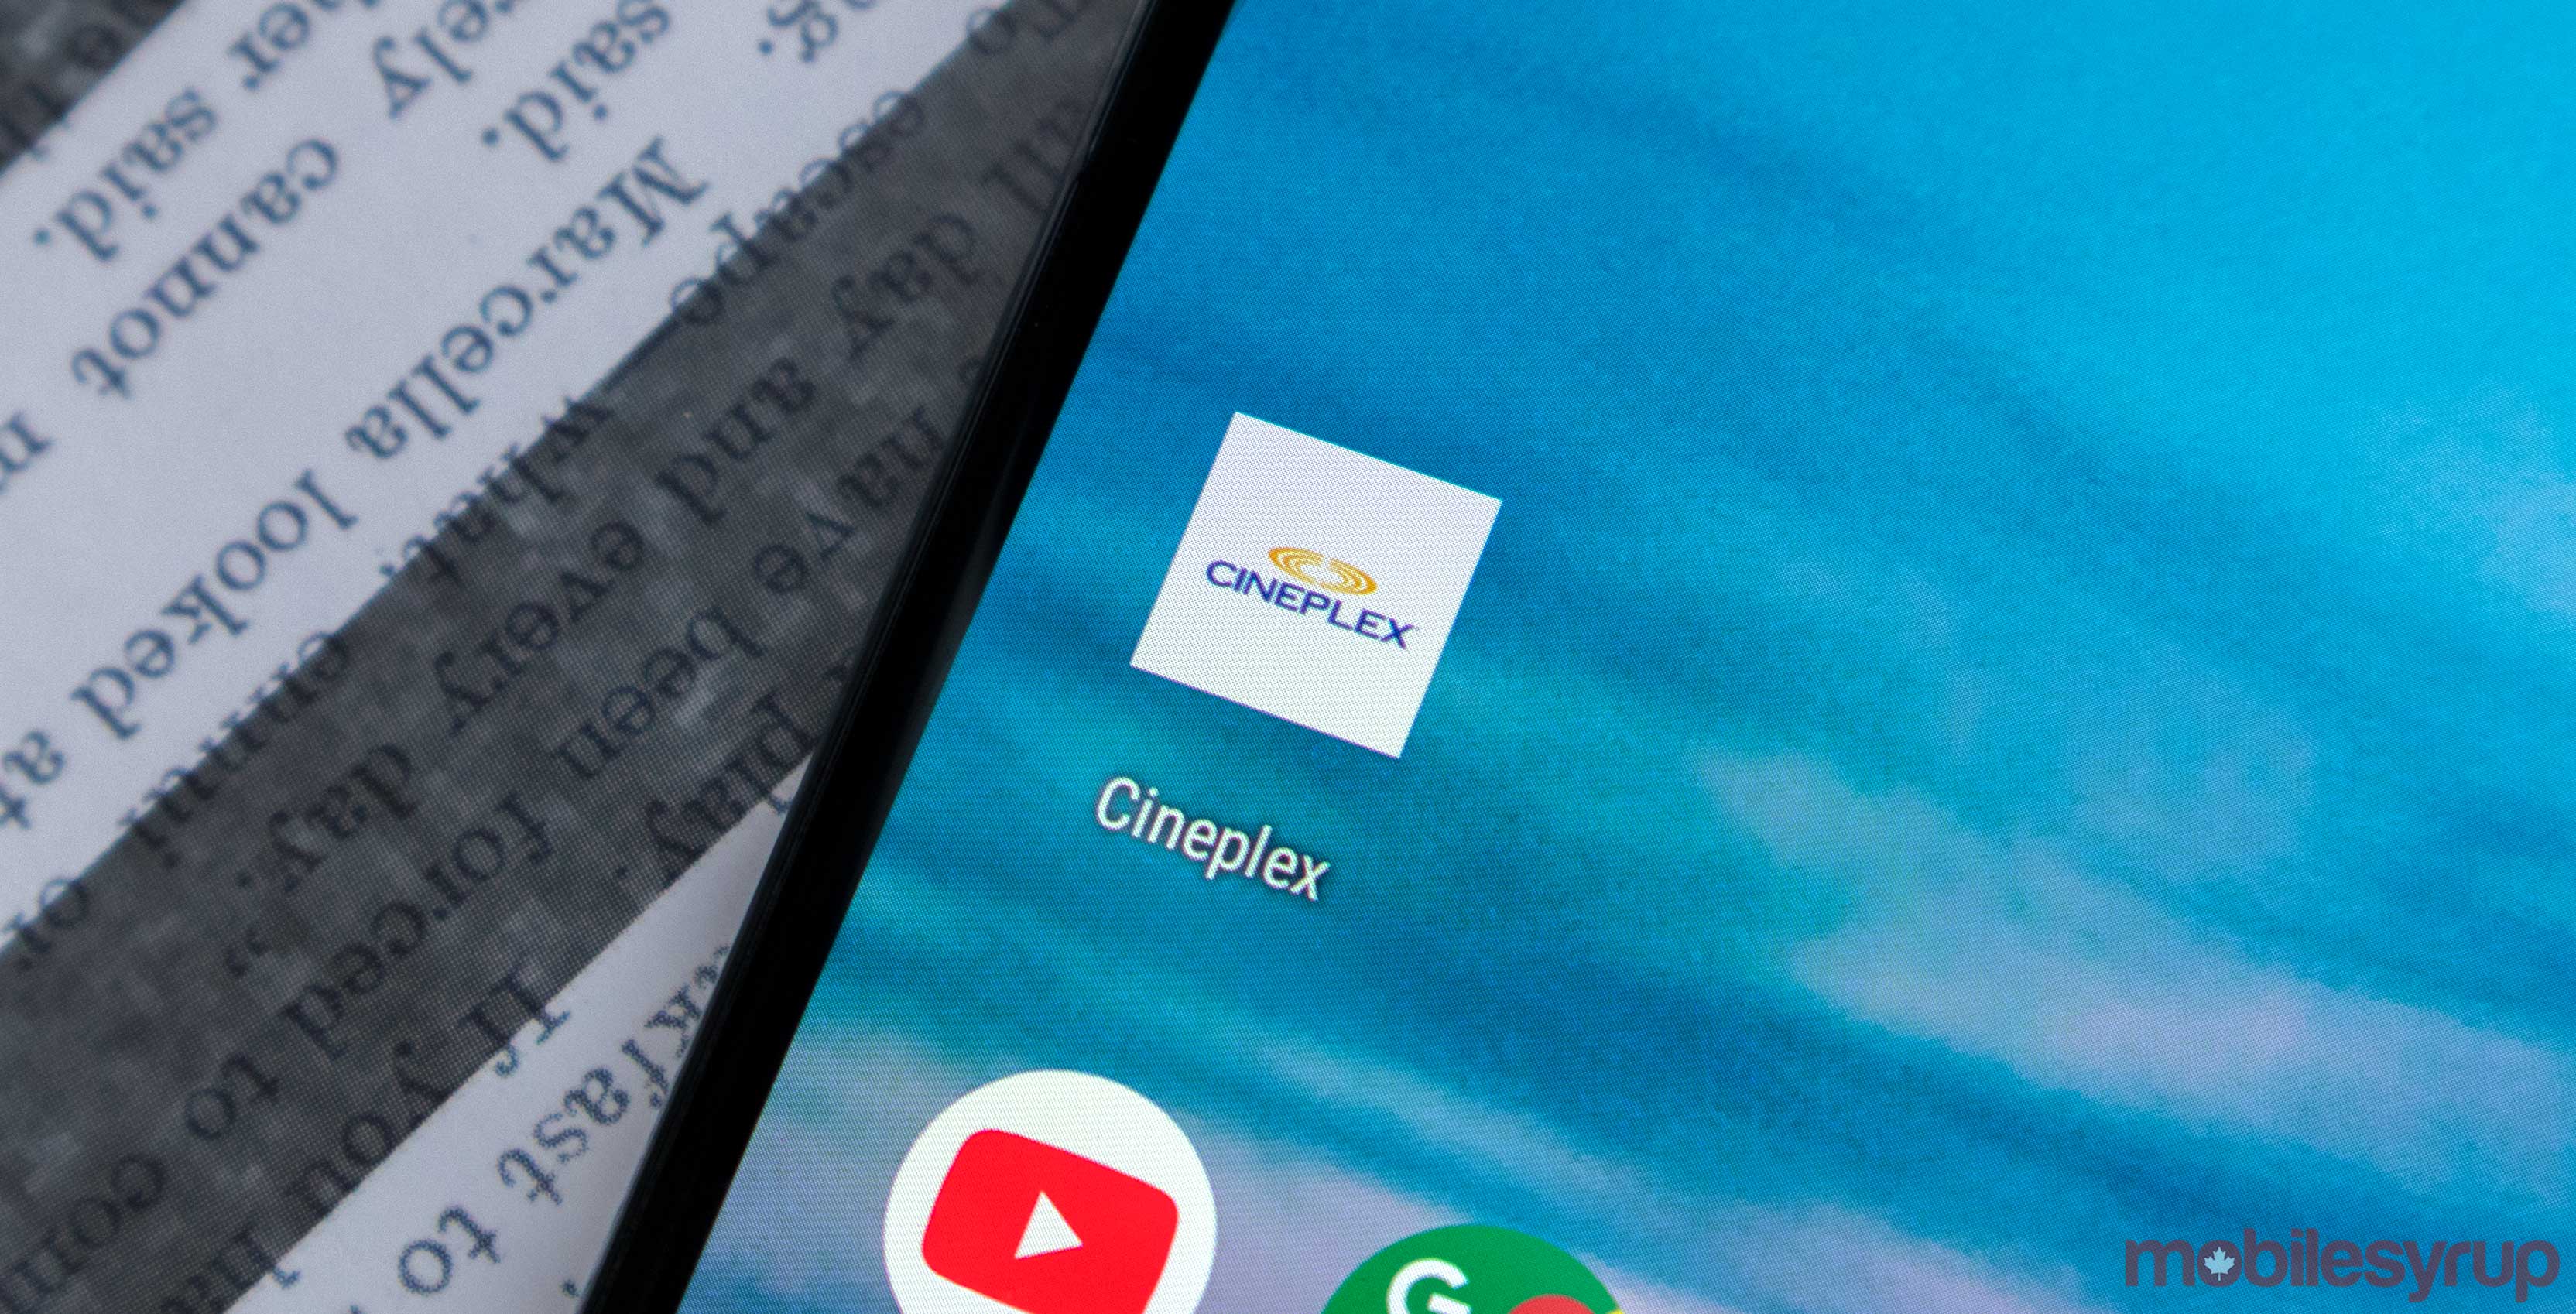 Cineplex app on Android